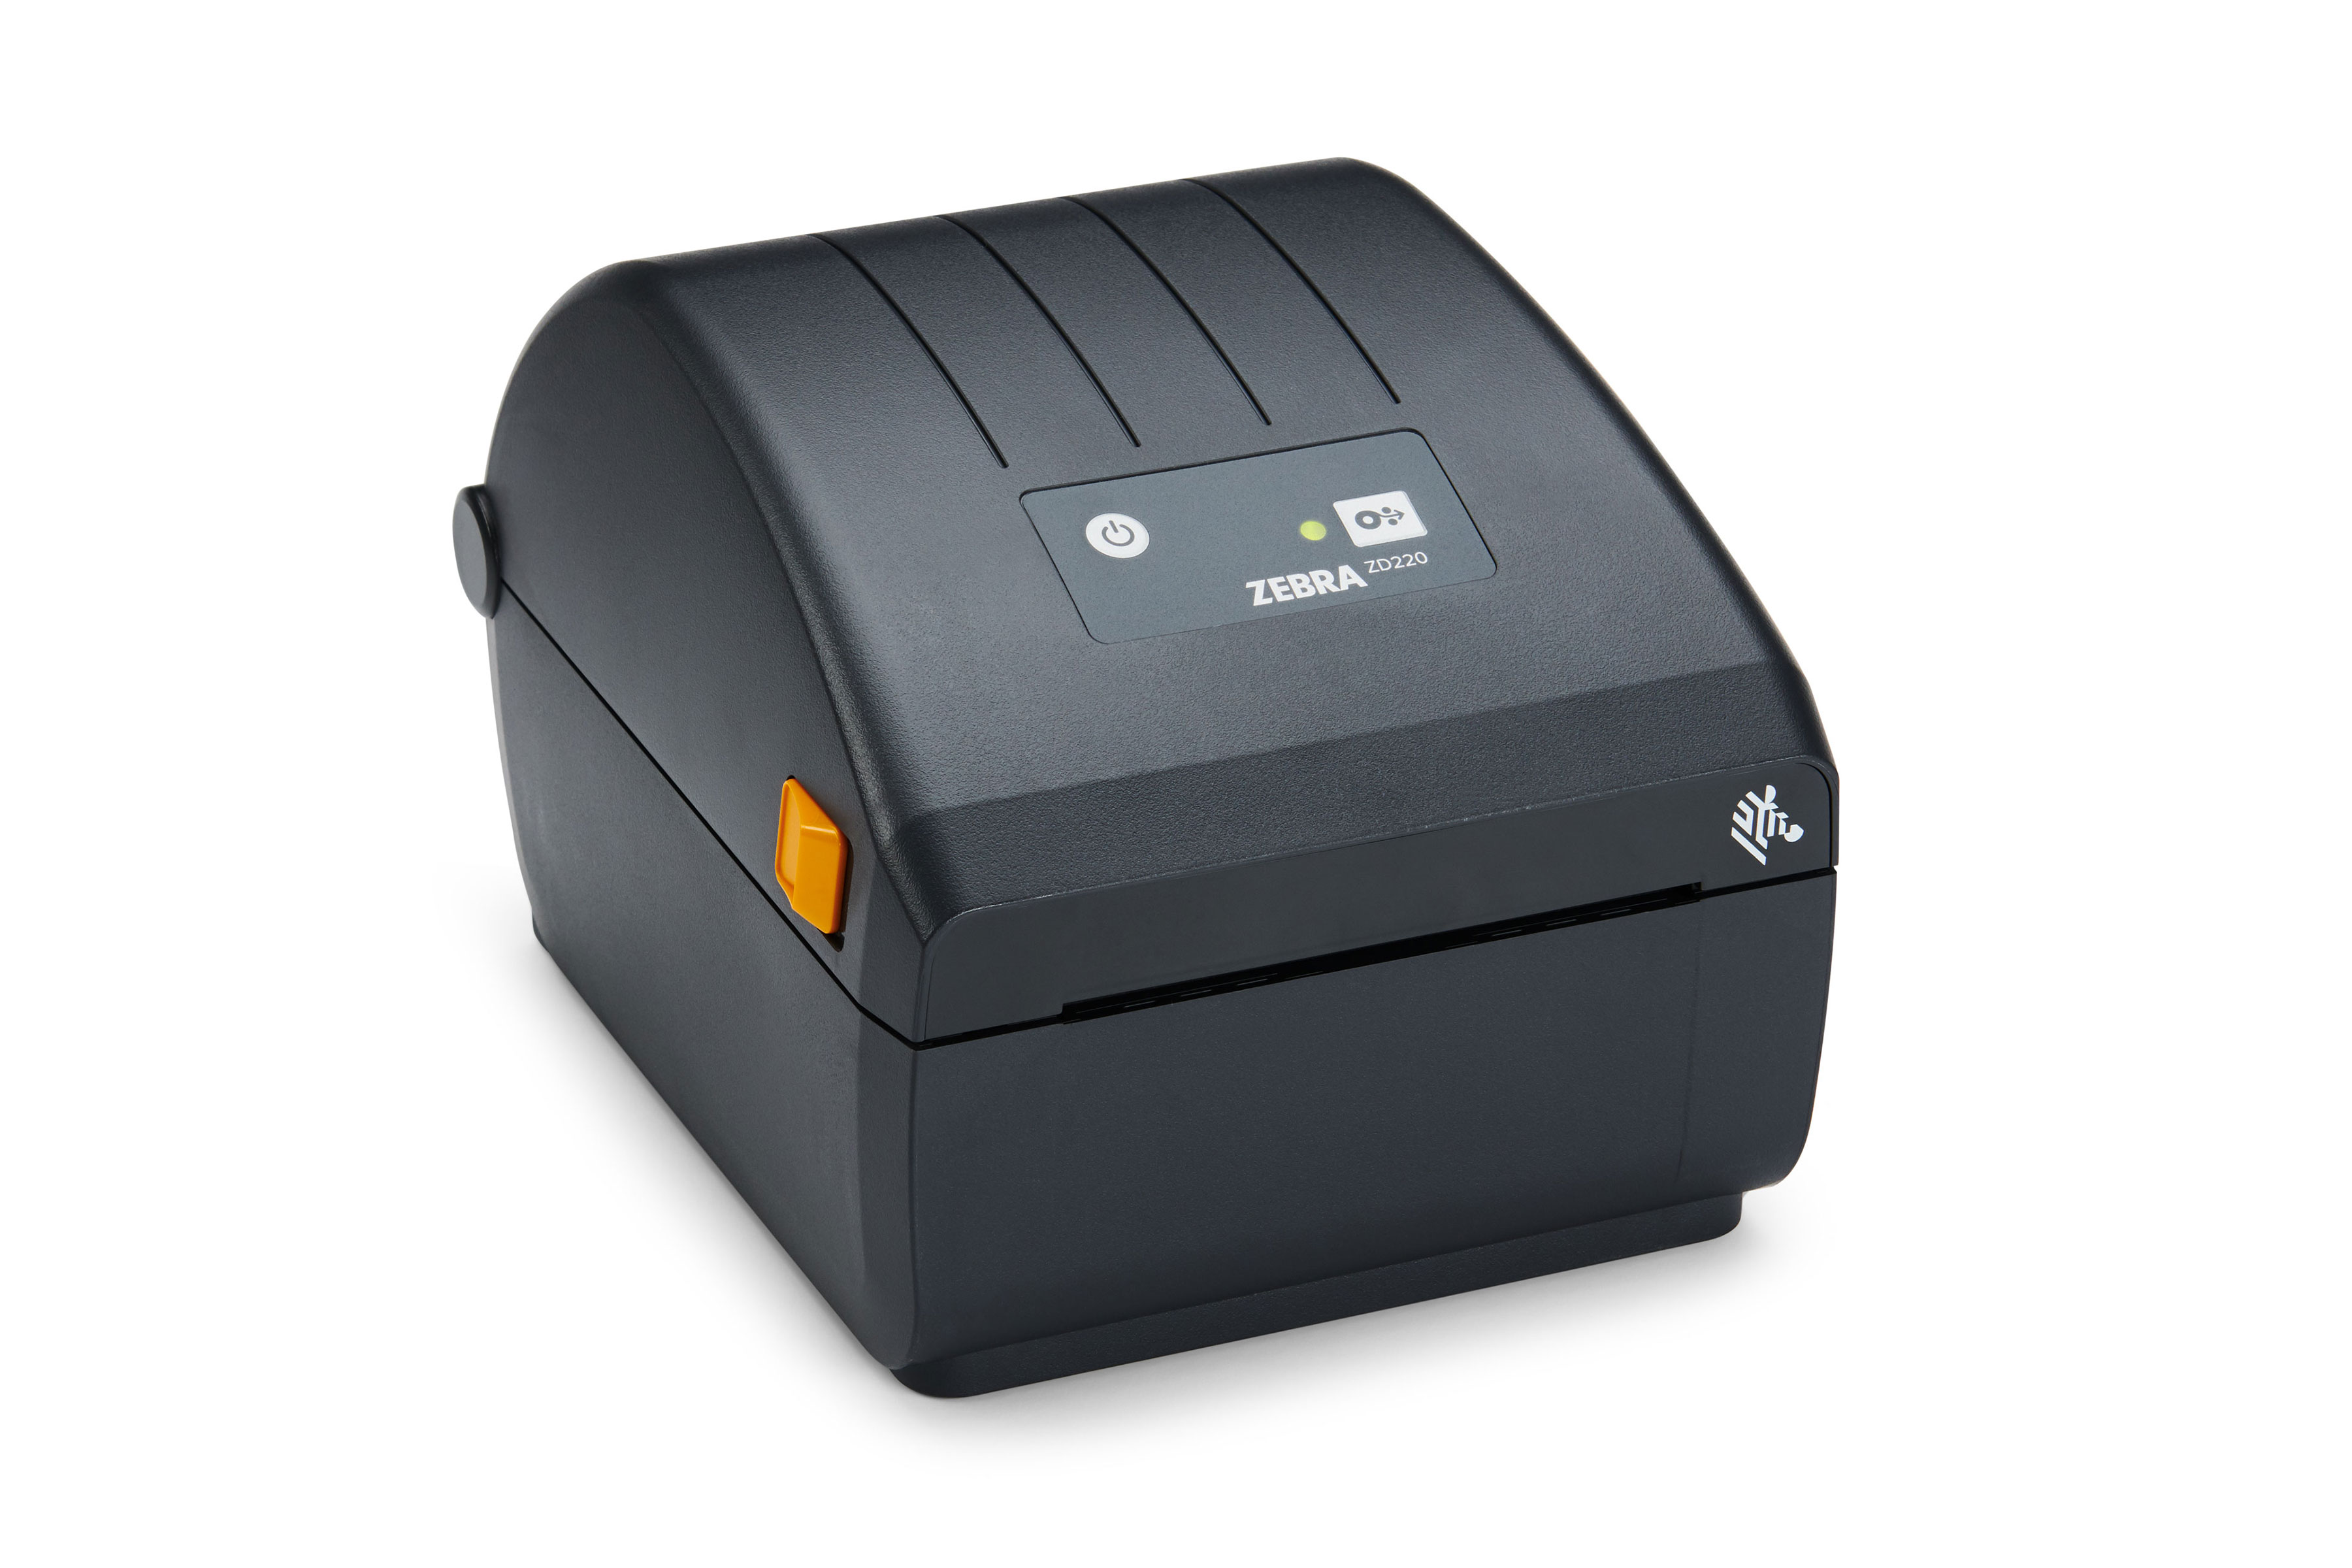 Front right view of a Zebra ZD200 desktop printer